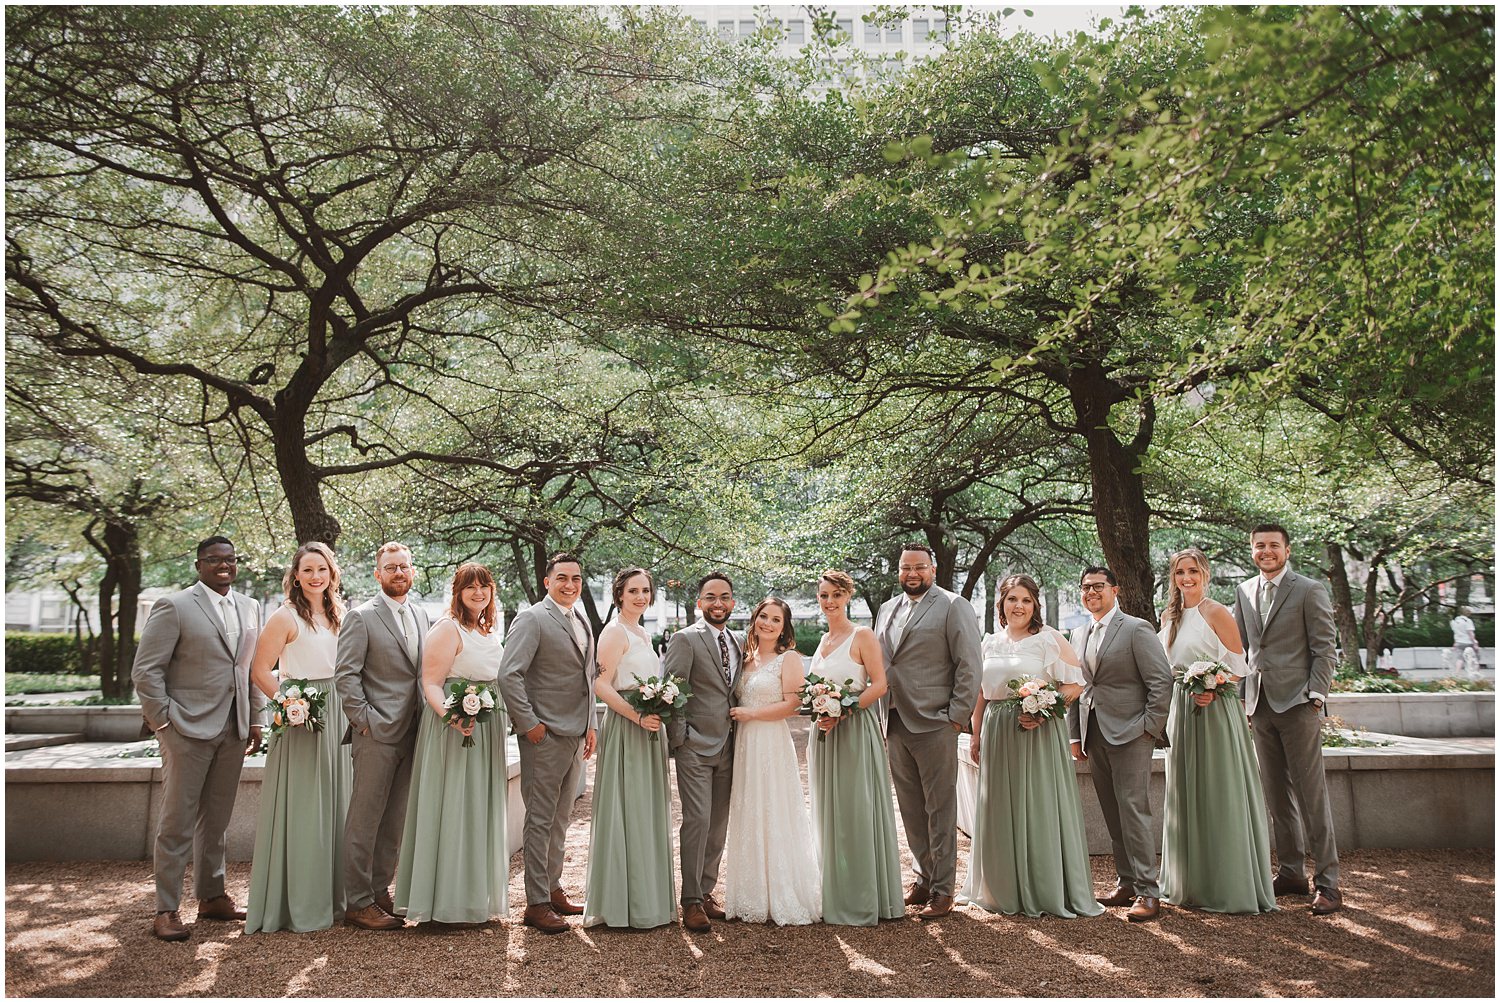 Art institute gardens Chicago, Wedding photography - wedding party photos